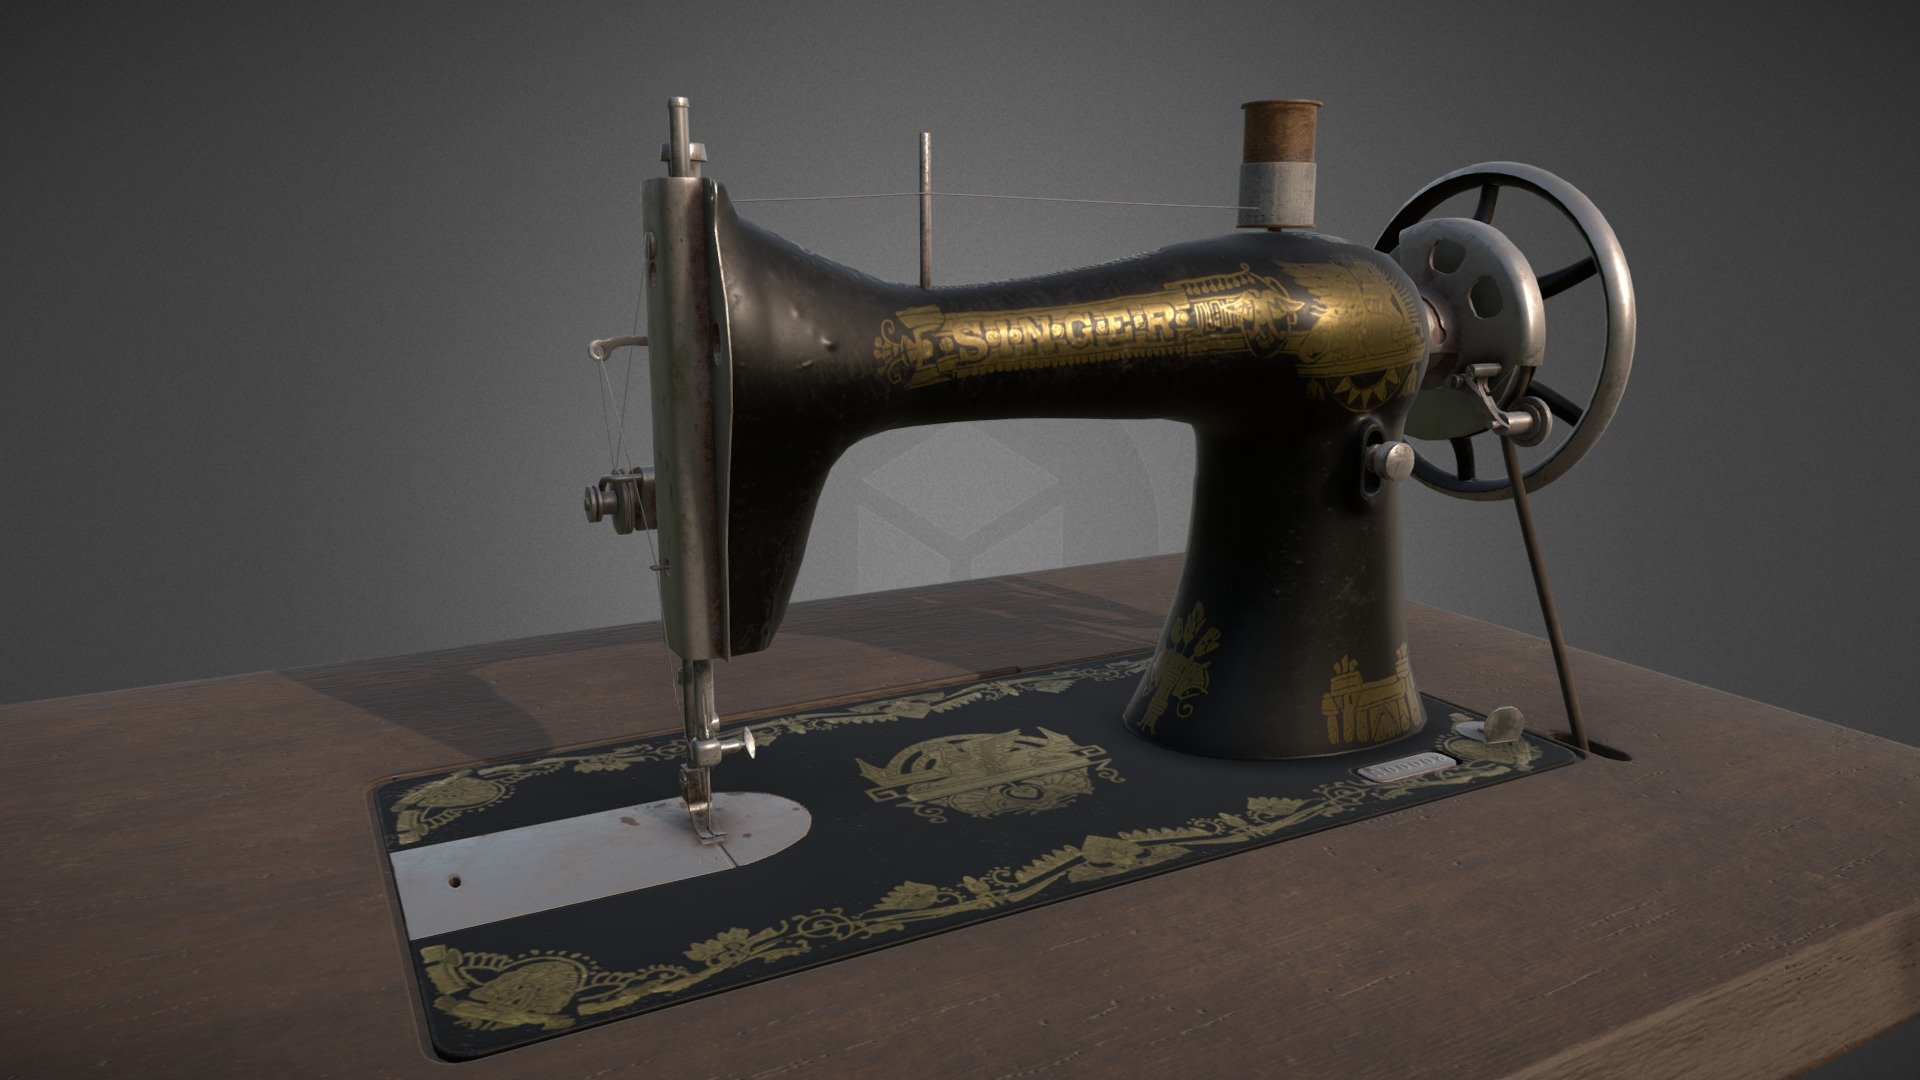 Vintage Singer Sewing Machine 3D Model Kit, Paper Cut Craft, Christmas Gift  